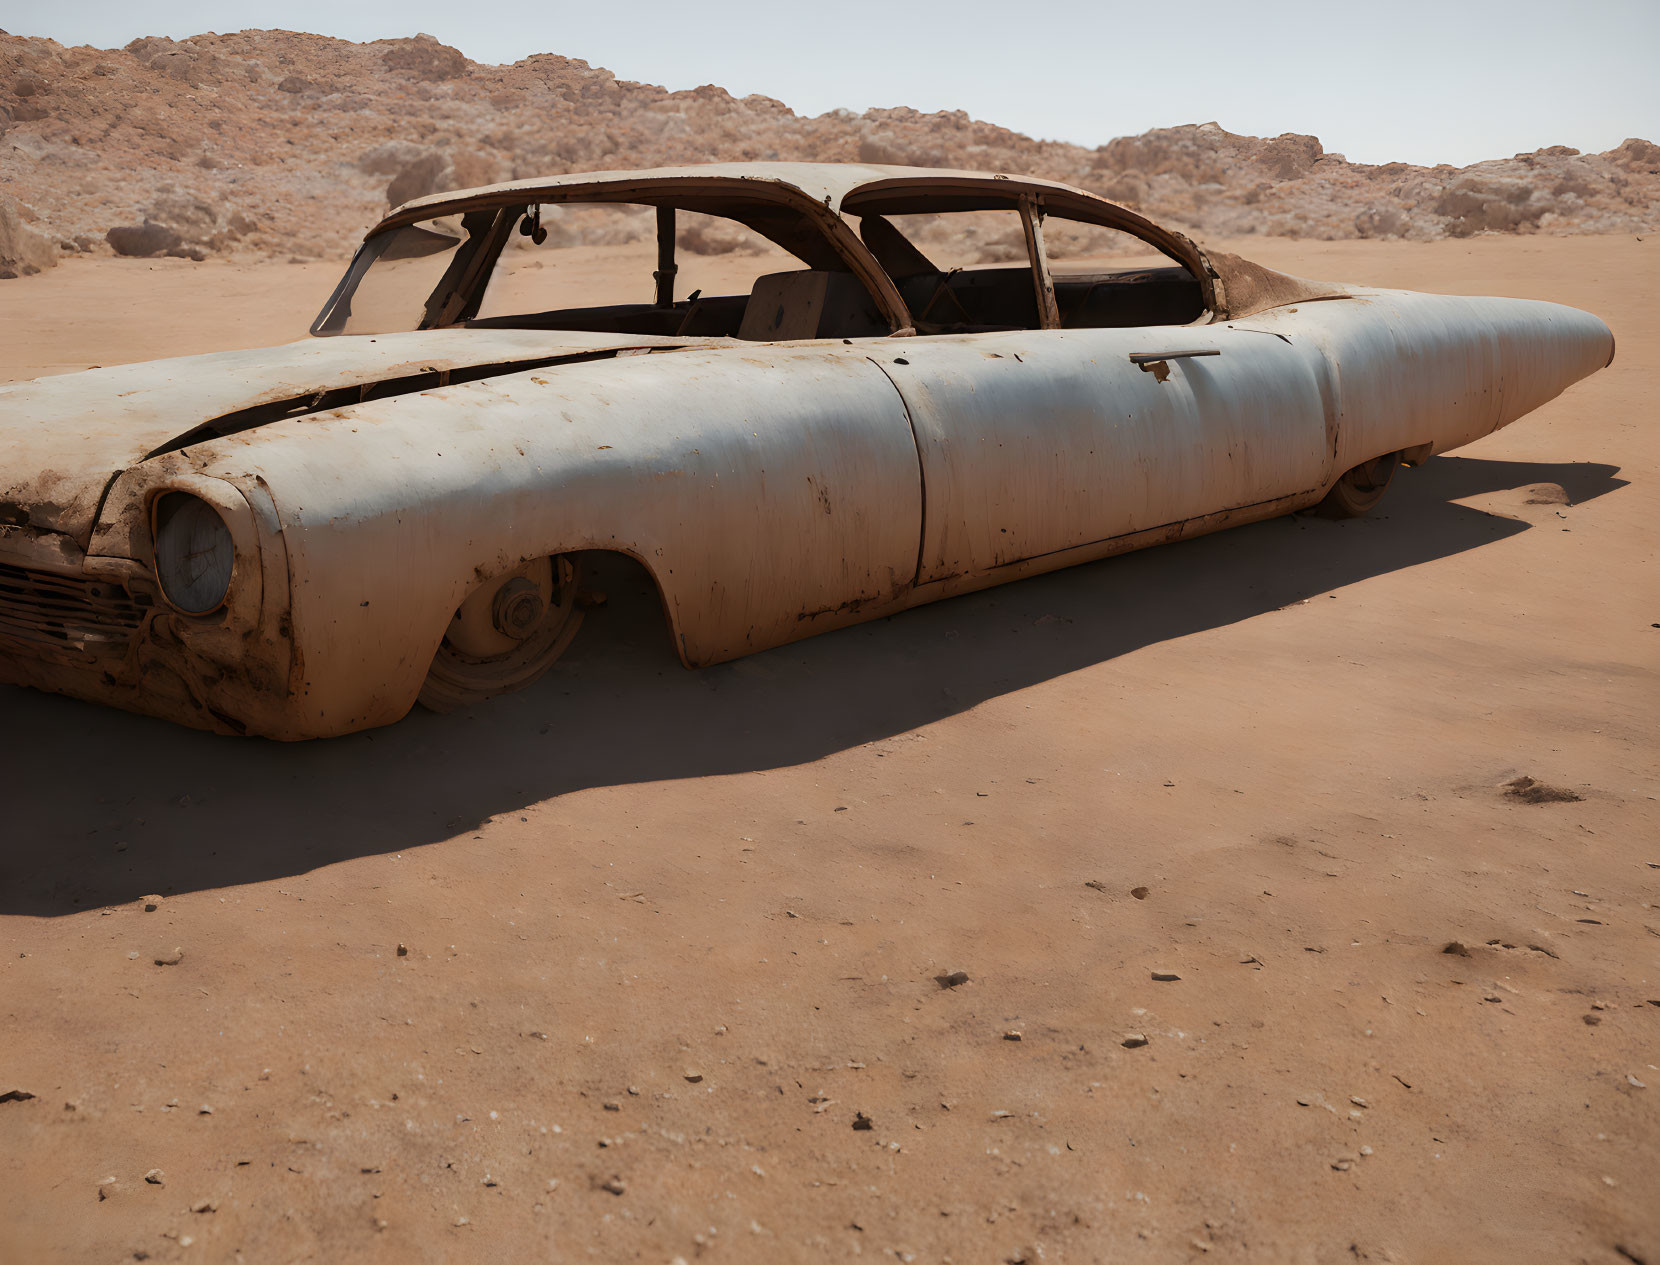 Abandoned car without wheels in desert landscape